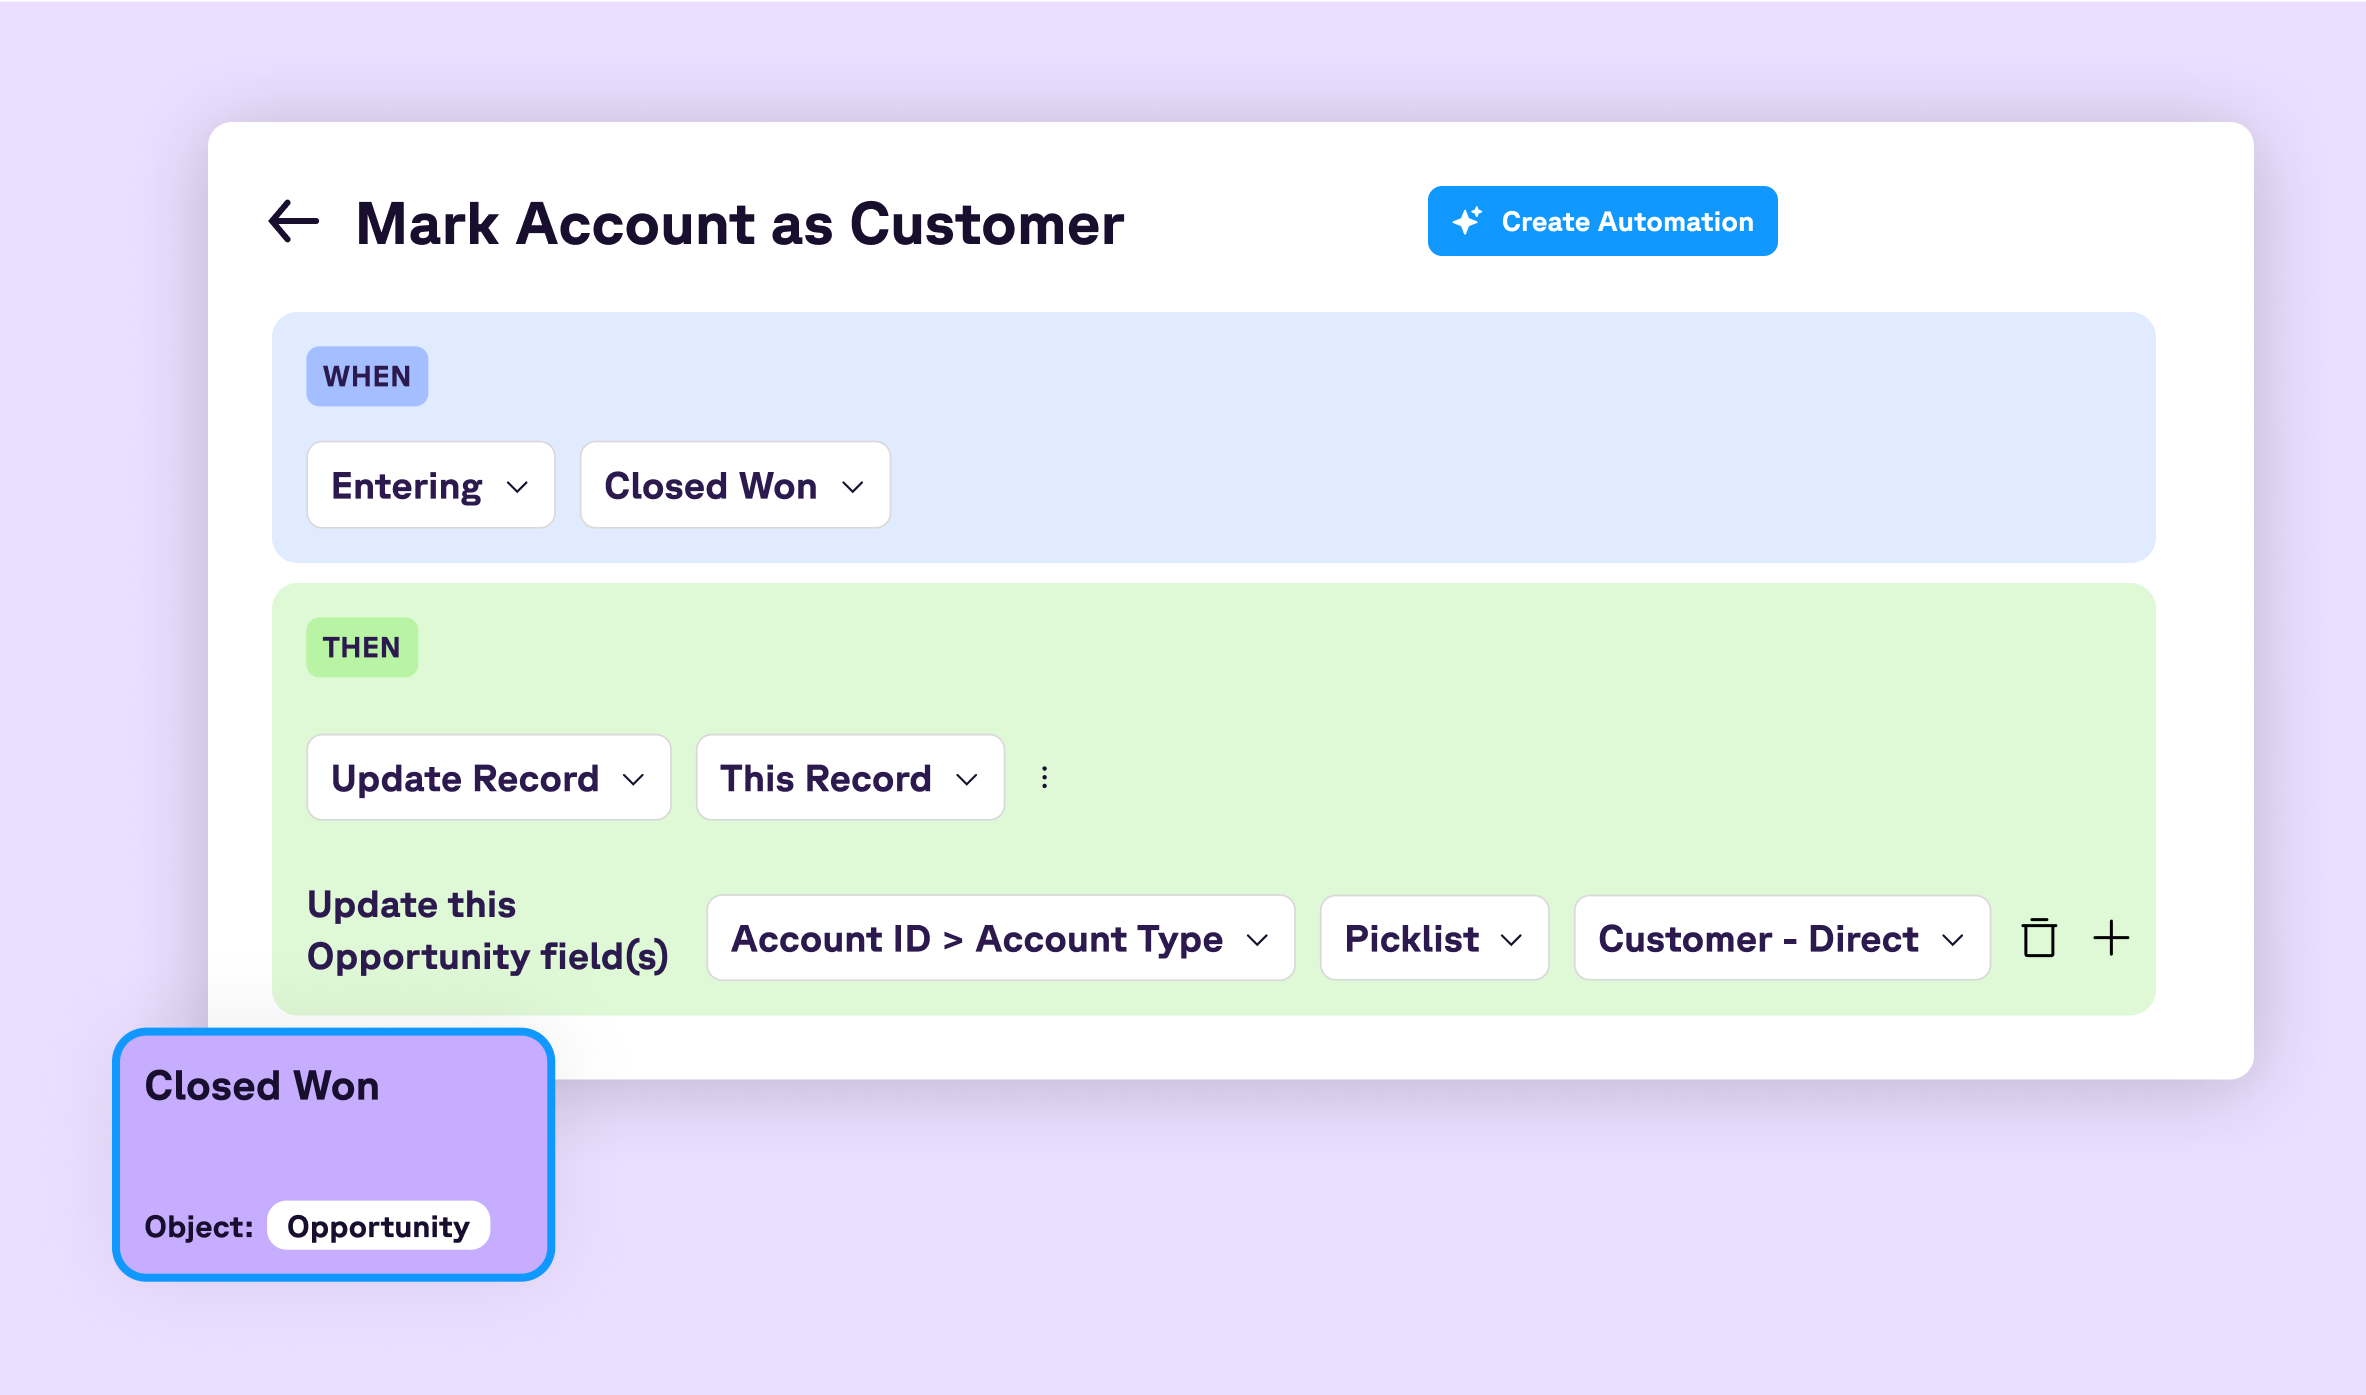 Mark Account as Customer Automation